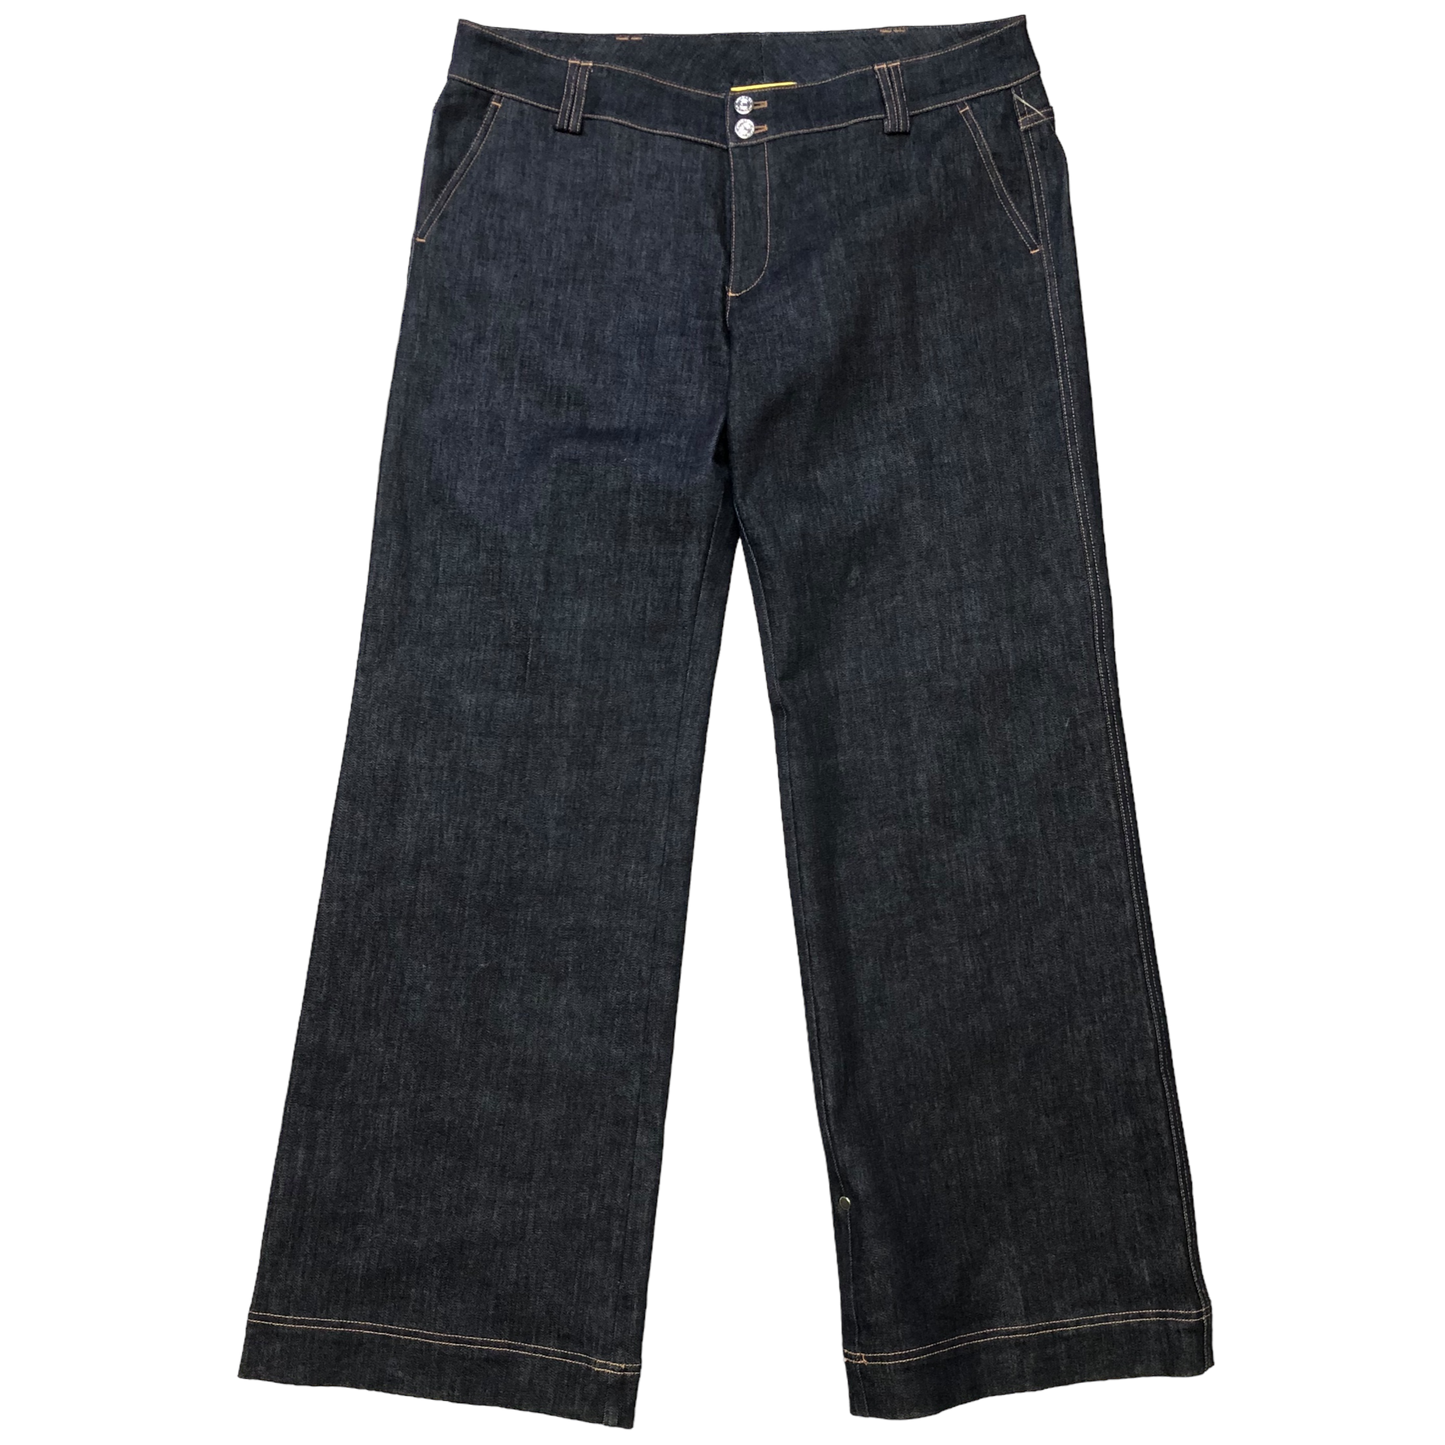 Jeans Designer By St. John  Size: 14